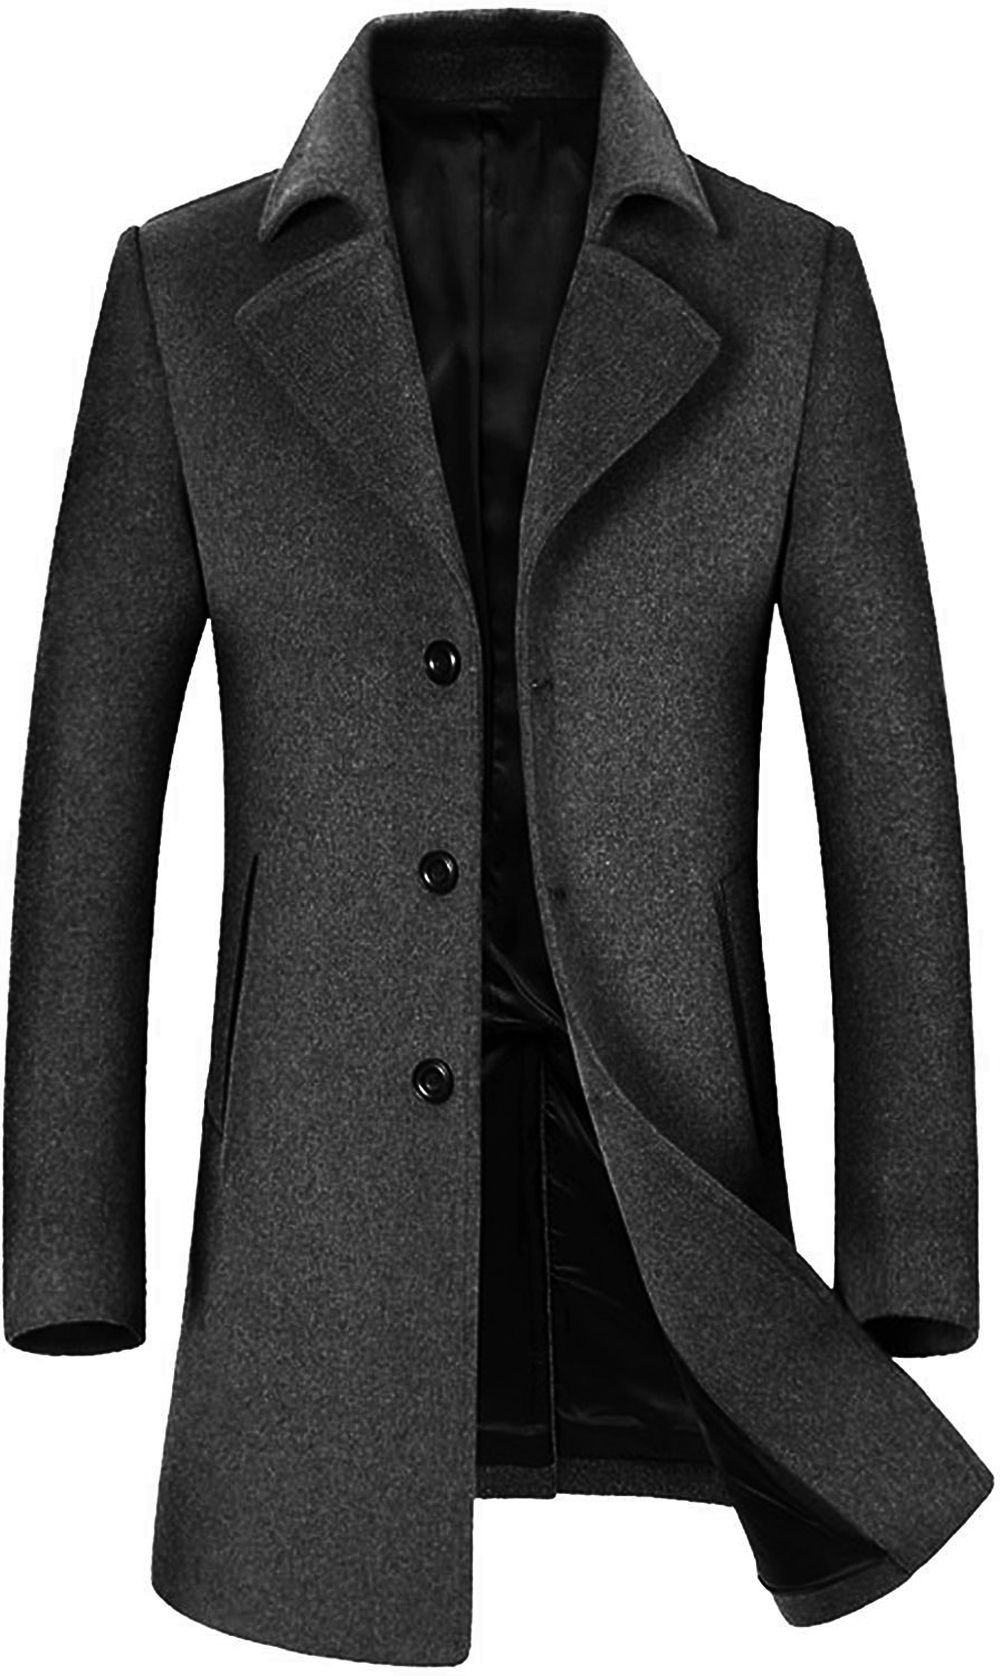 Men's Double Breast Black Trench Wool Coat, Gentle Style | VearFit